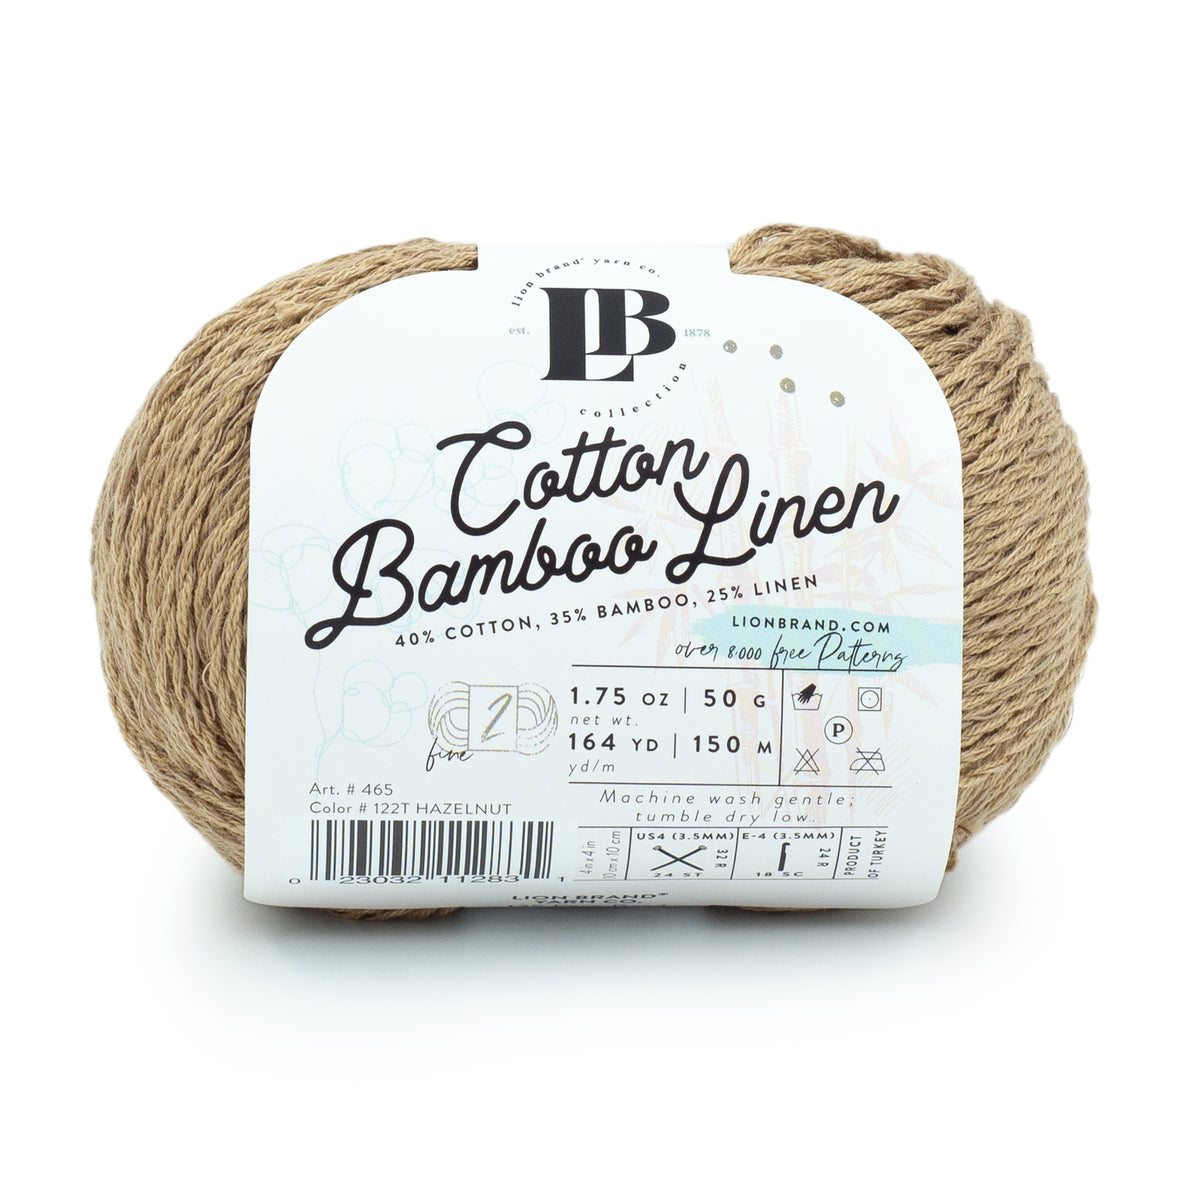 Athens Envelope Bag (Crochet) – Lion Brand Yarn